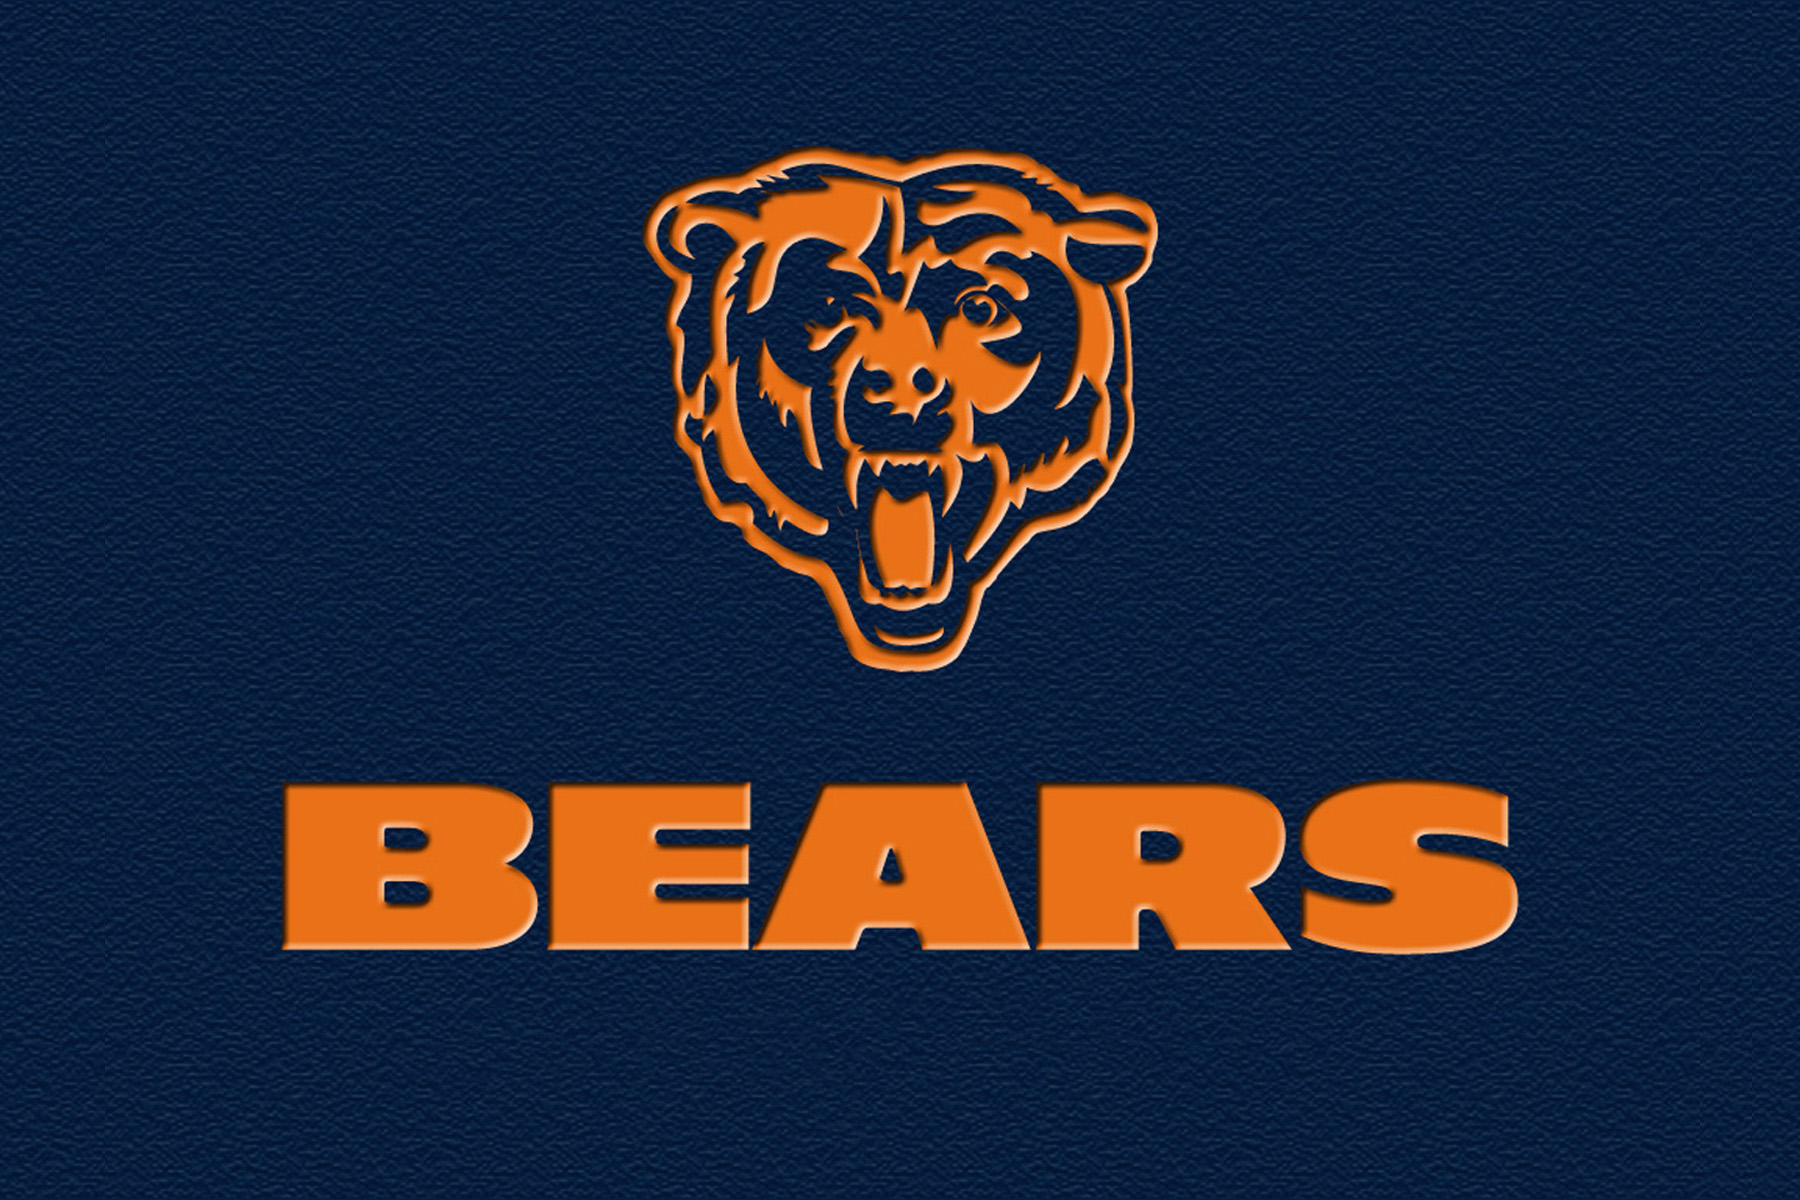 Chicago Bears Logos – NFL | Find Logos At FindThatLogo.com | The 